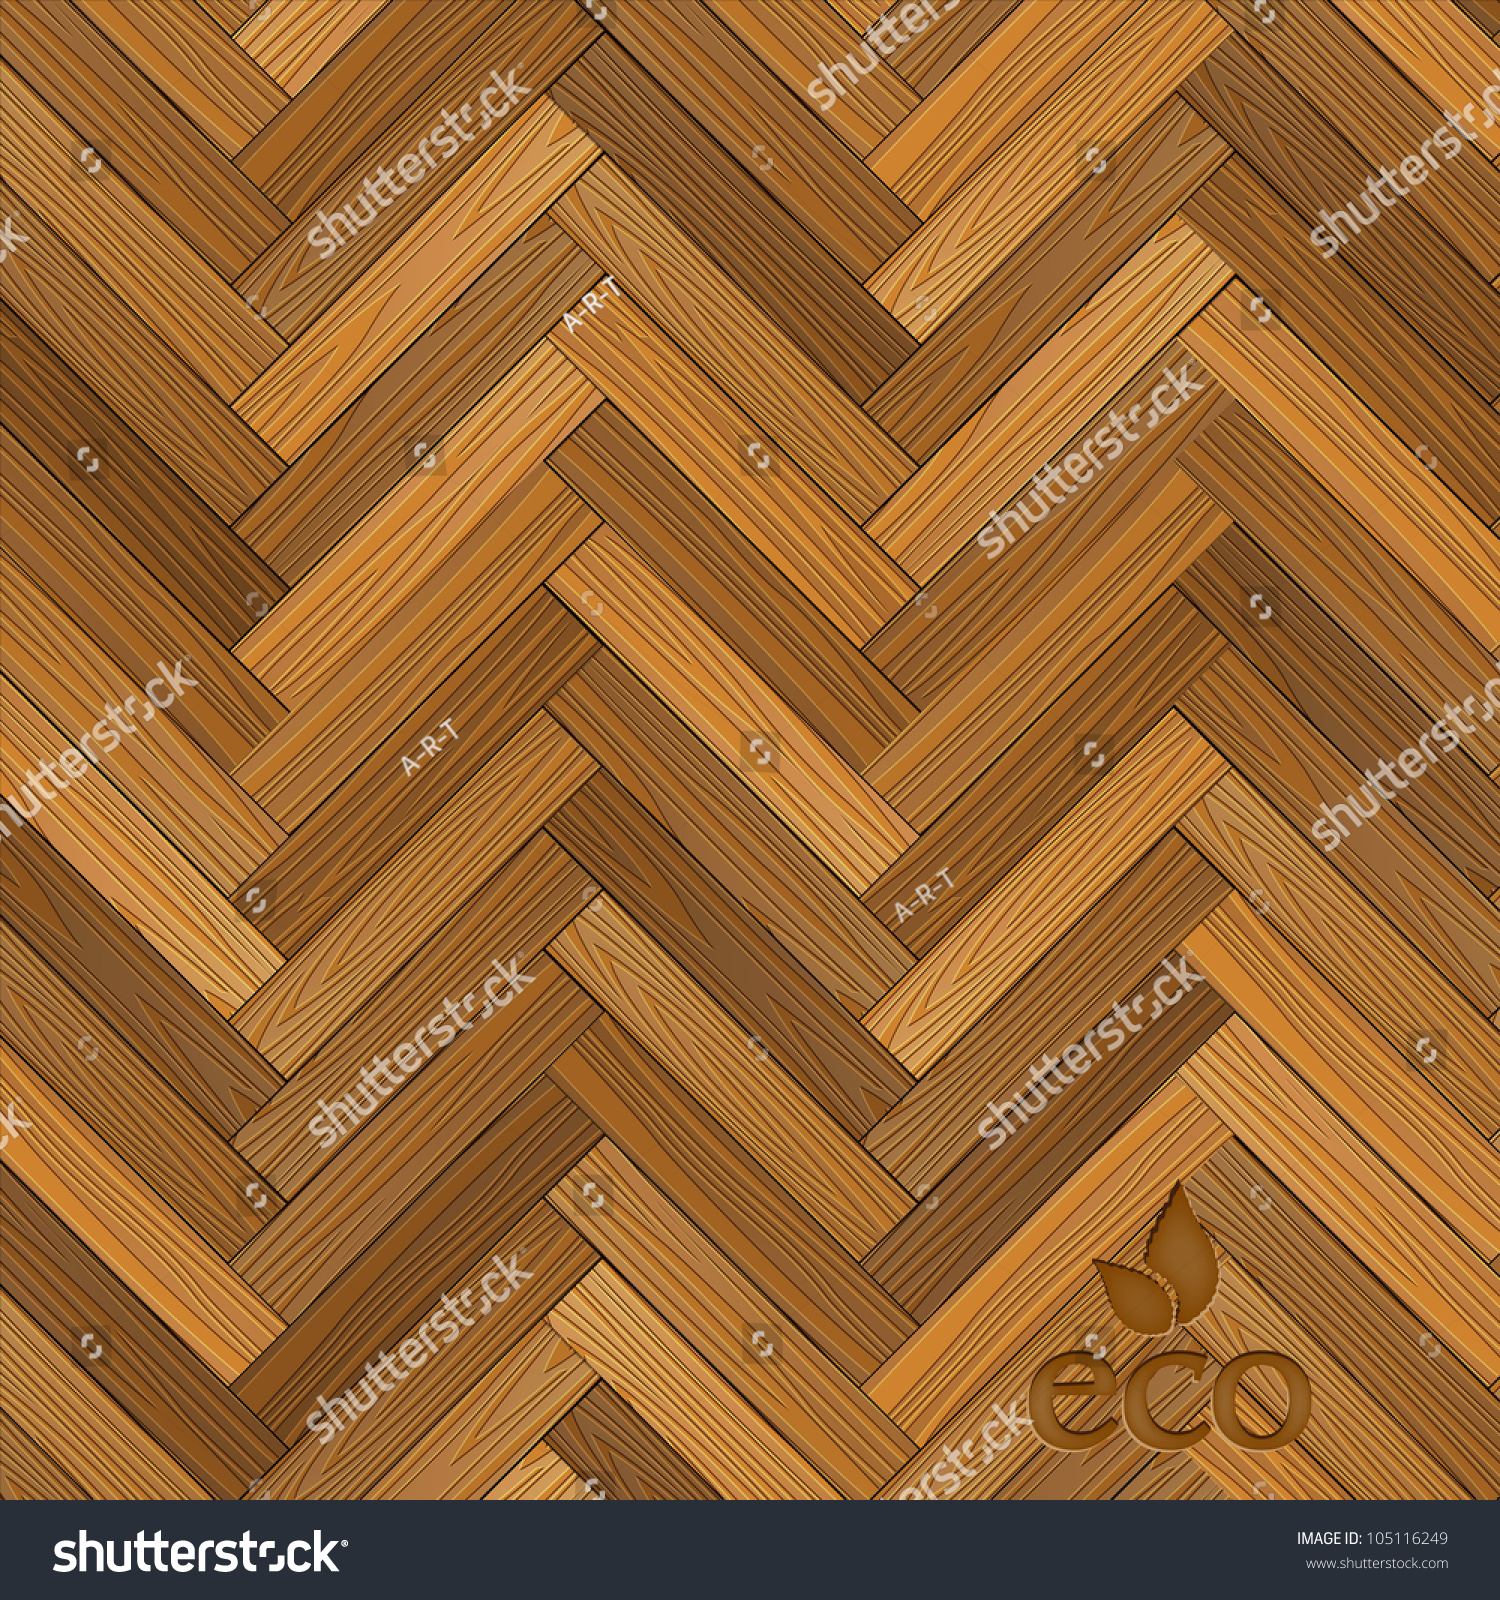 Vector Wood Parquet Floorraster Version 105116249 Shutterstock